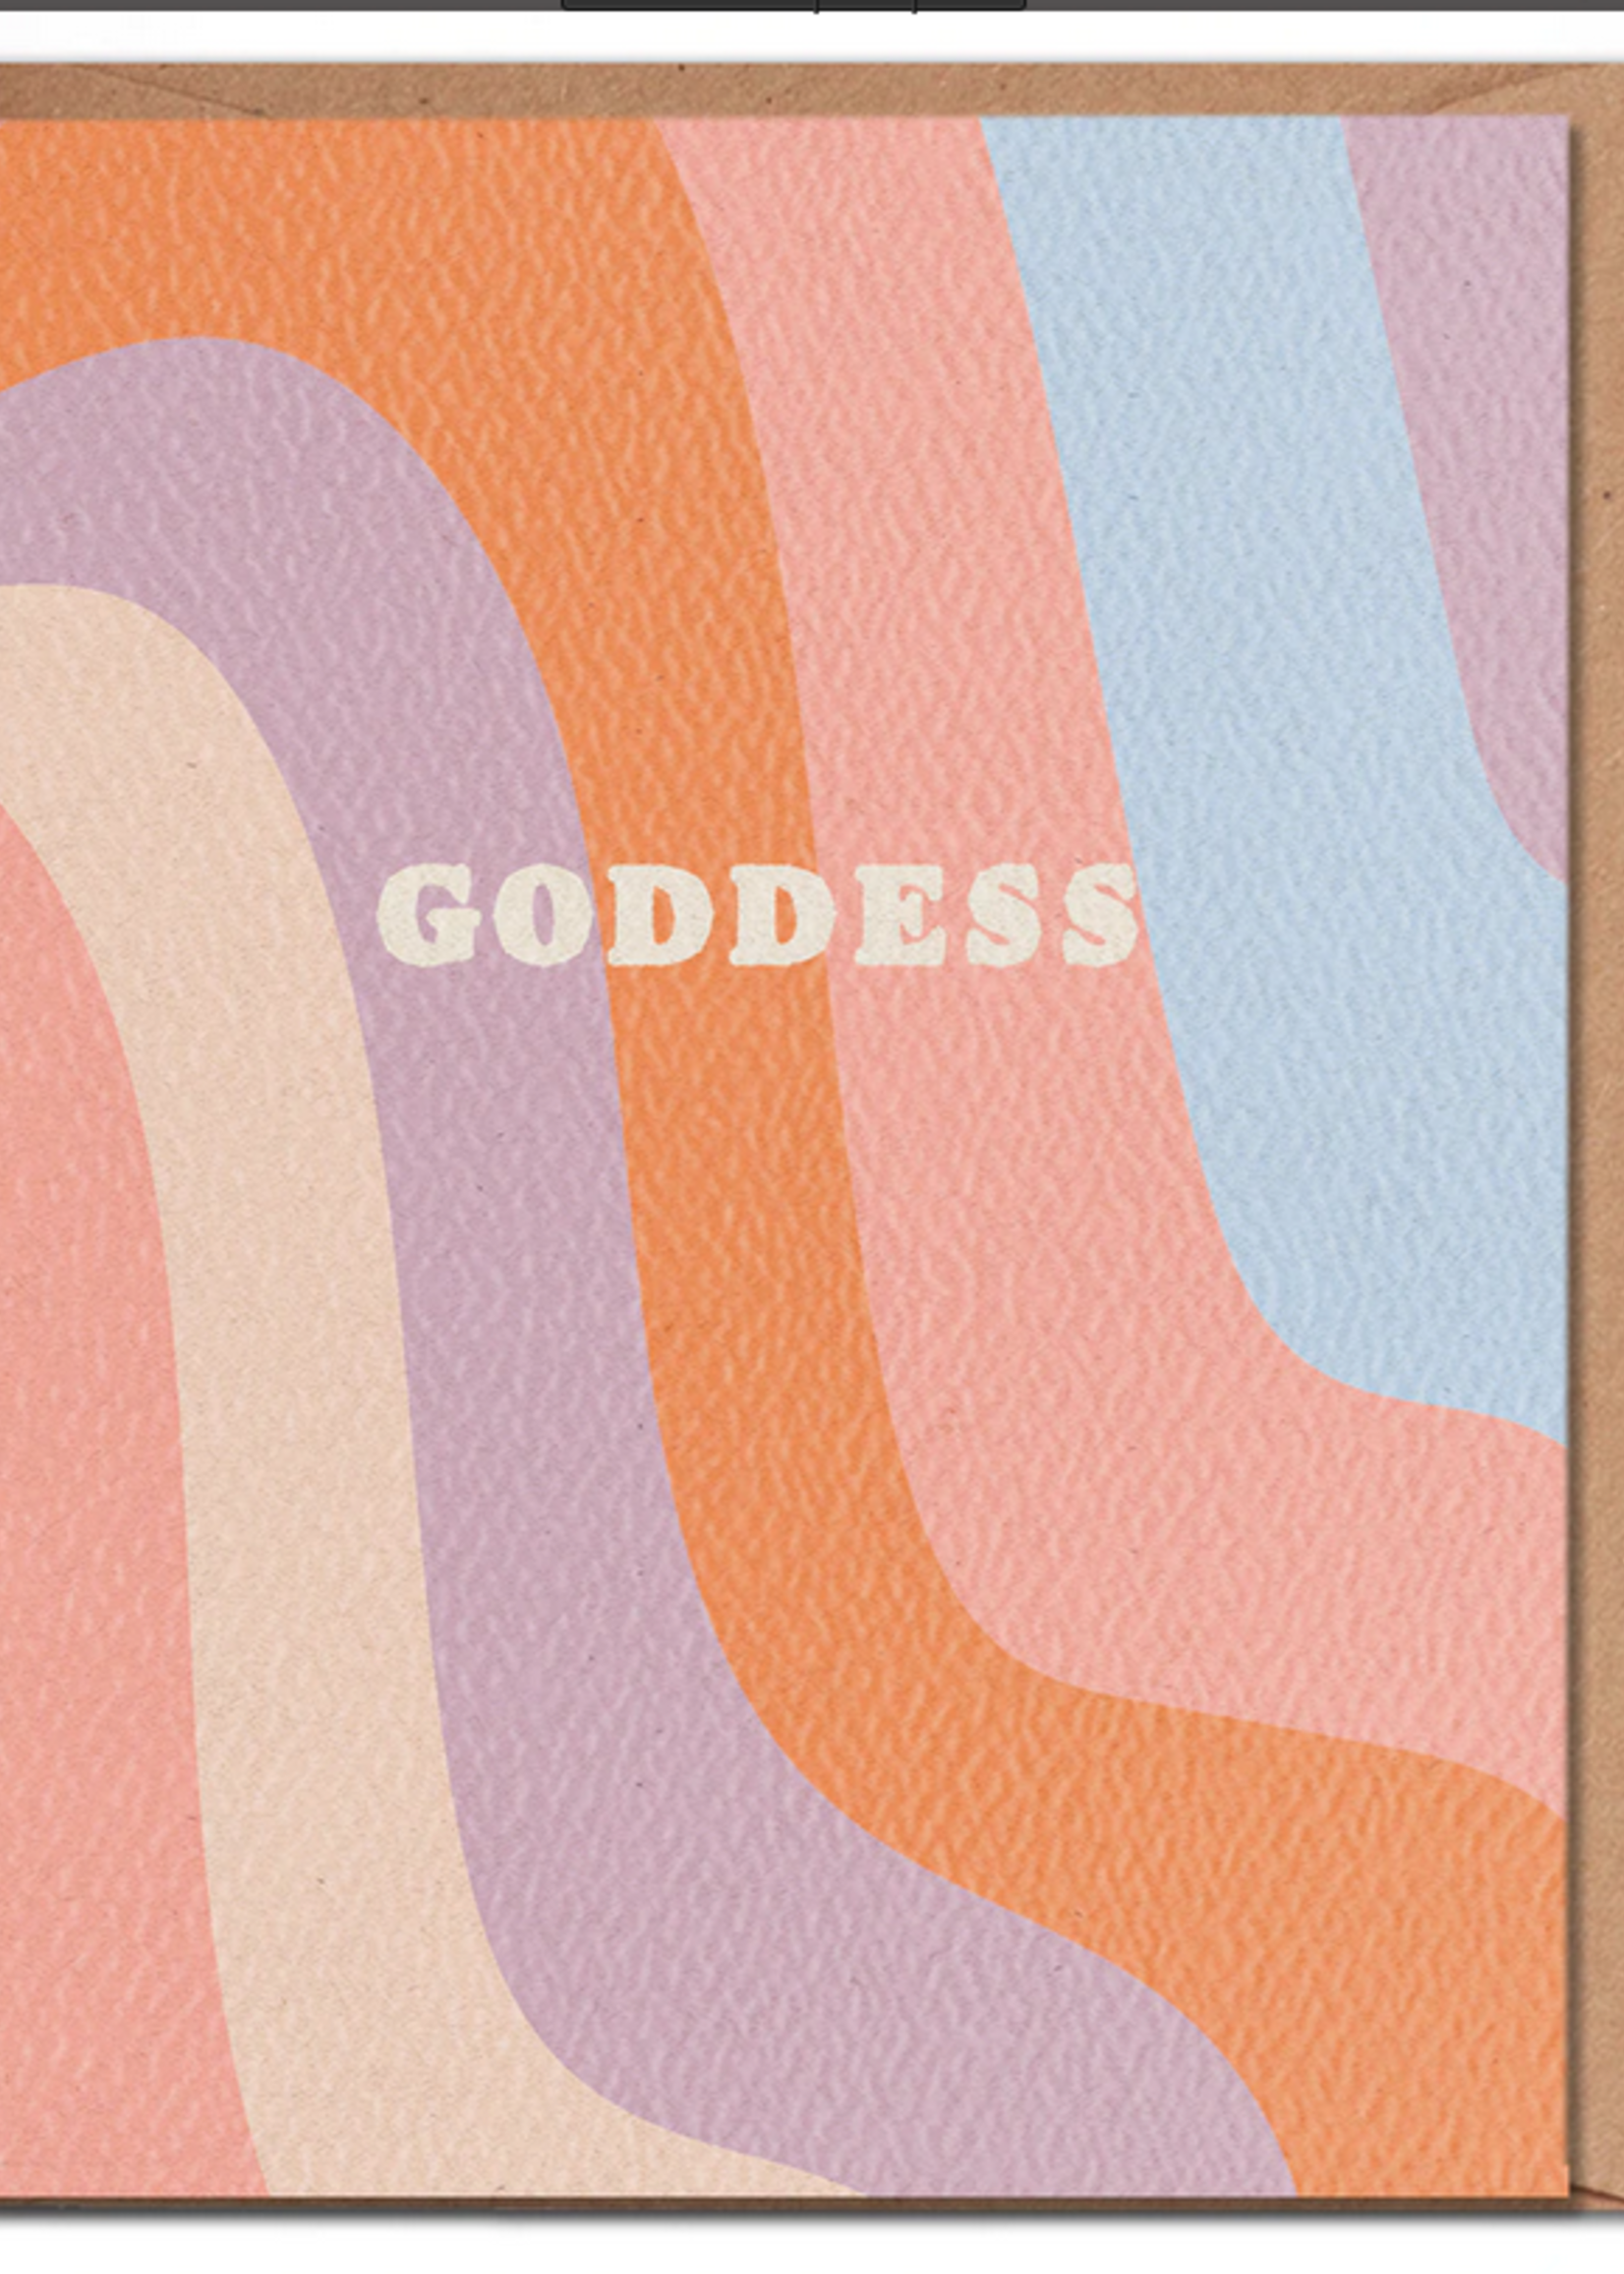 daydream prints goddess card